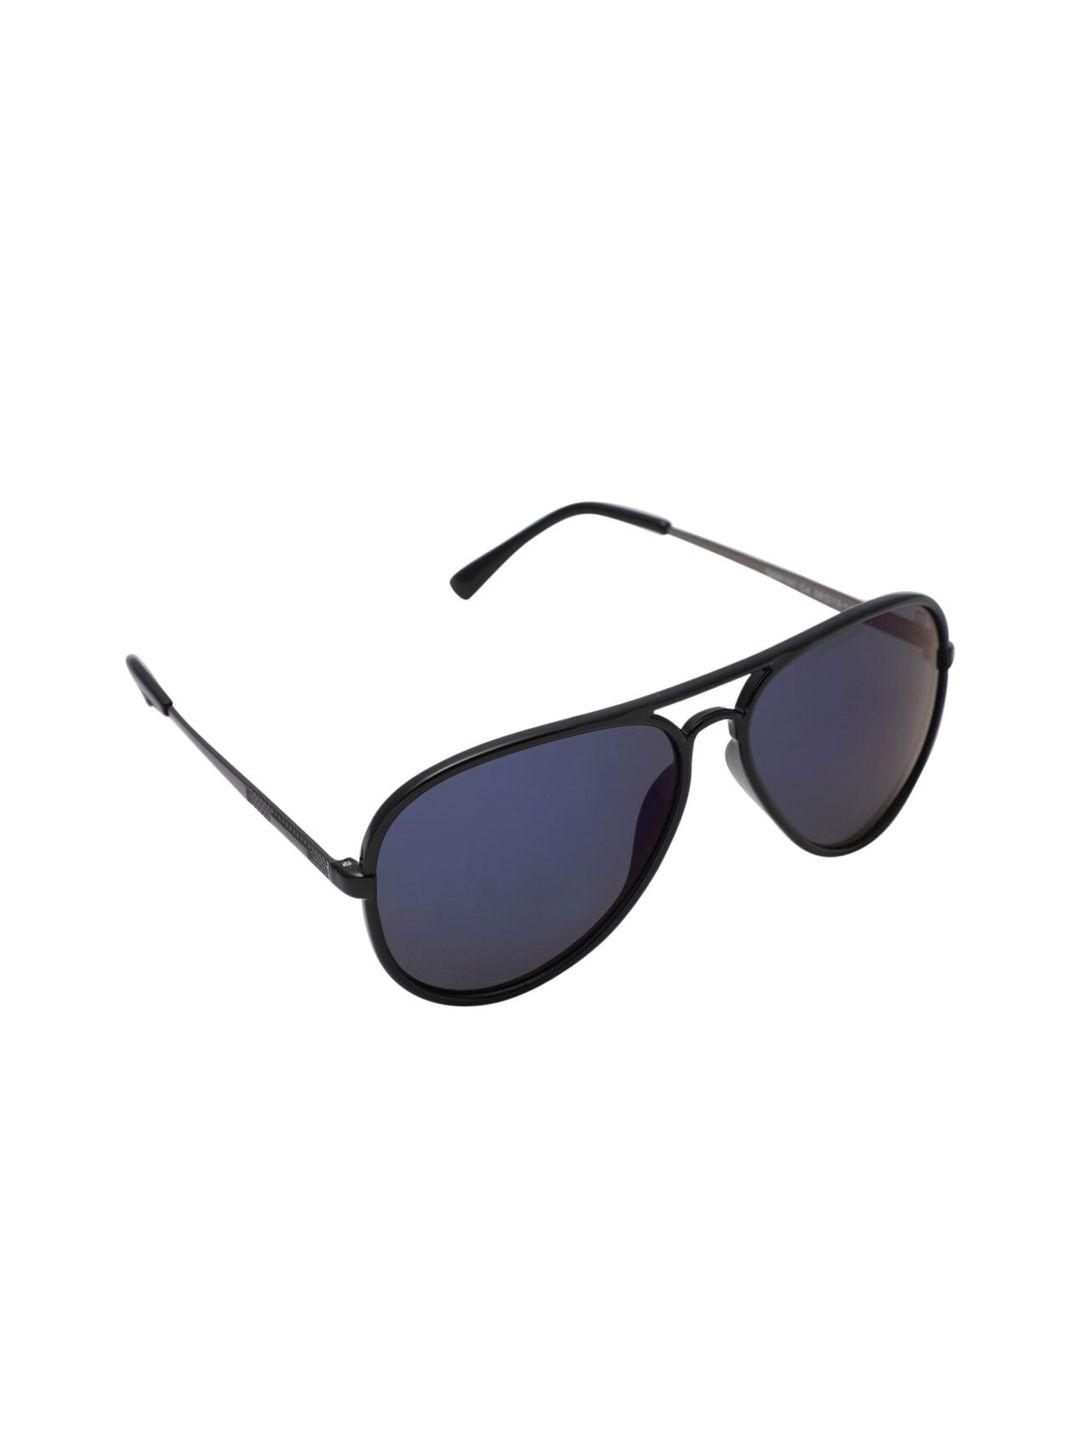 gio-collection-unisex-grey-lens-&-black-aviator-sunglasses-gm6191c04